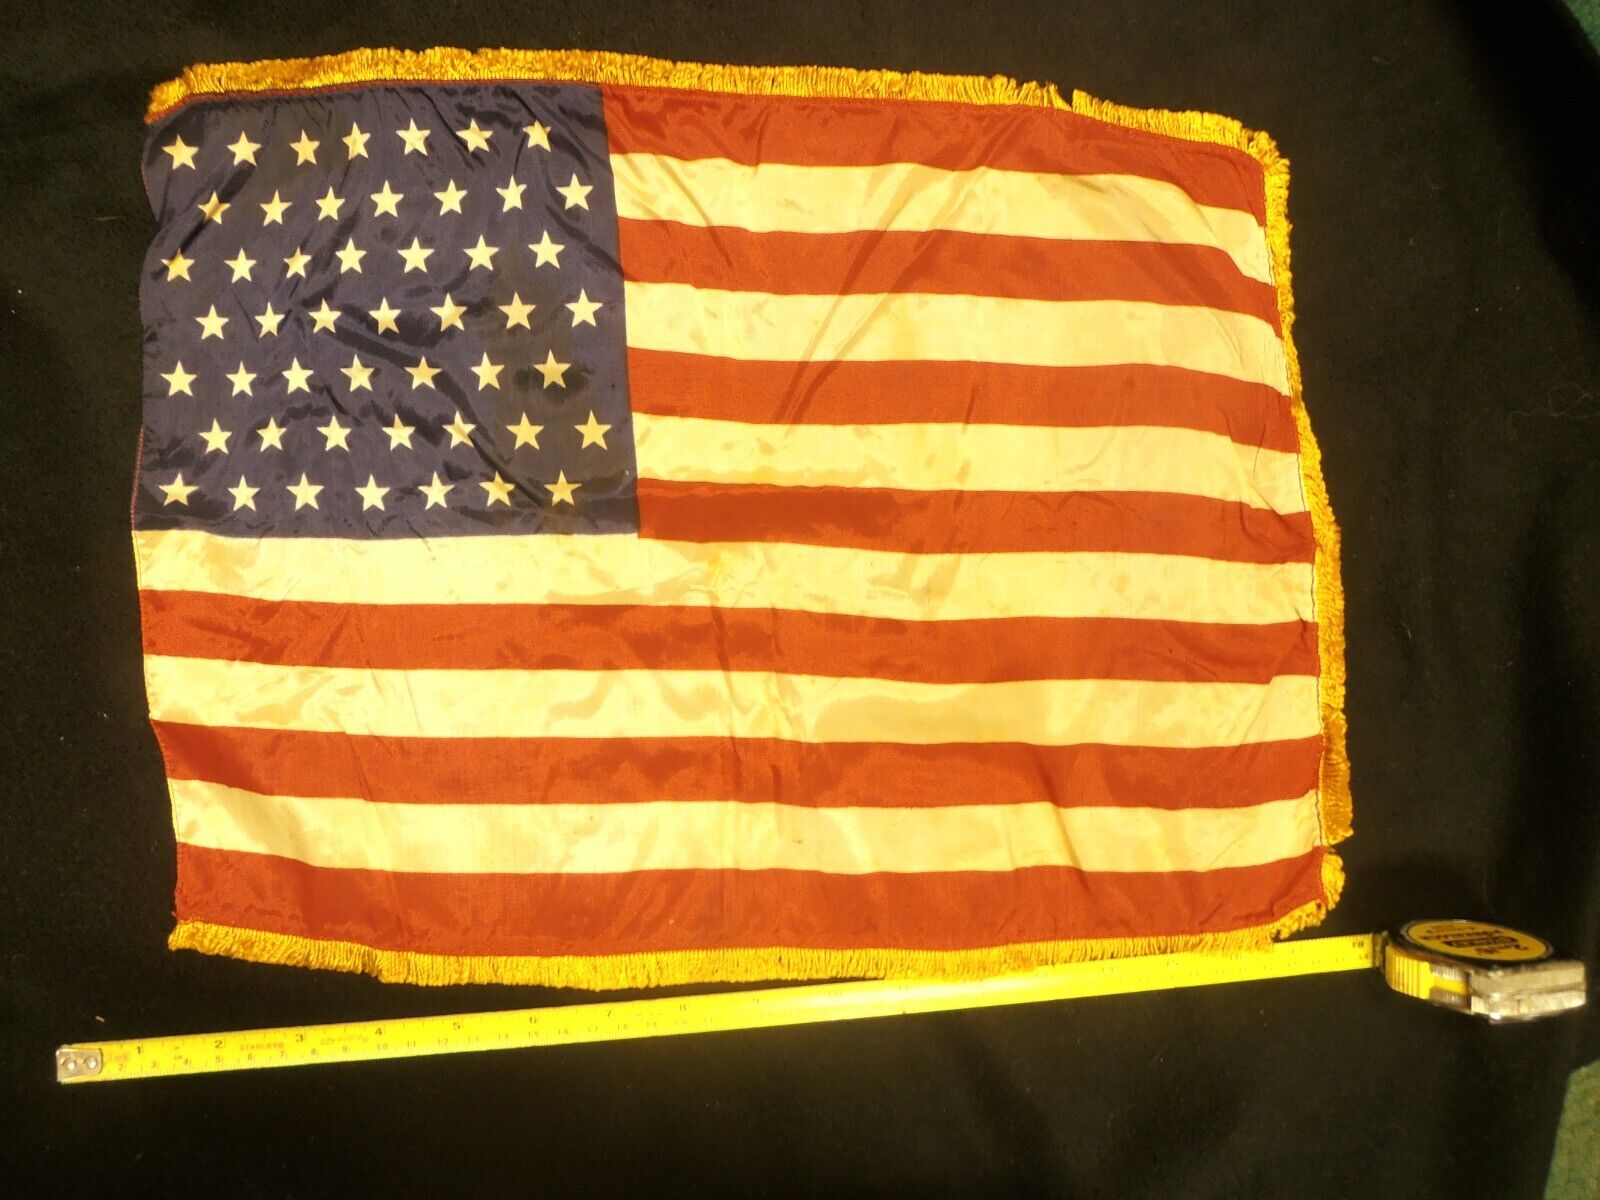 SCARCE 49 STAR AMERICAN FLAG 17 X 12 INCH GOLD FRINGED POLITICAL-